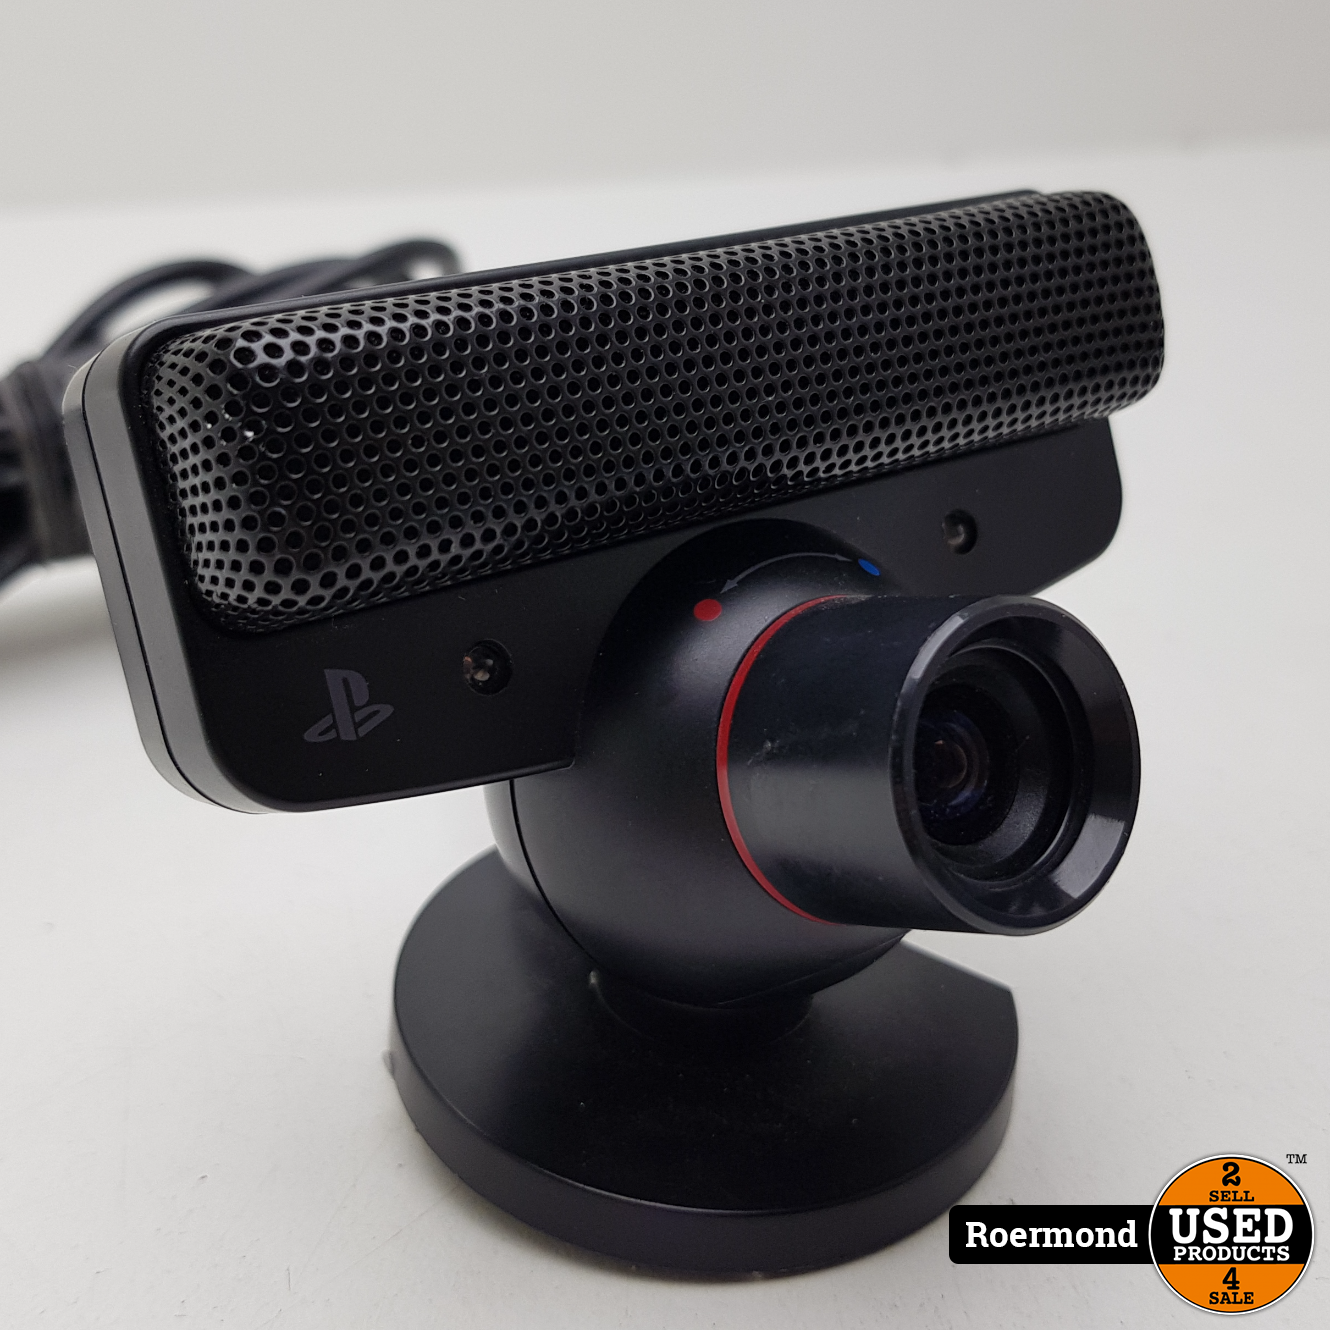 zwaan Schande Nodig uit Sony Playstation 3 Eye Camera met Microfoon! - Used Products Roermond